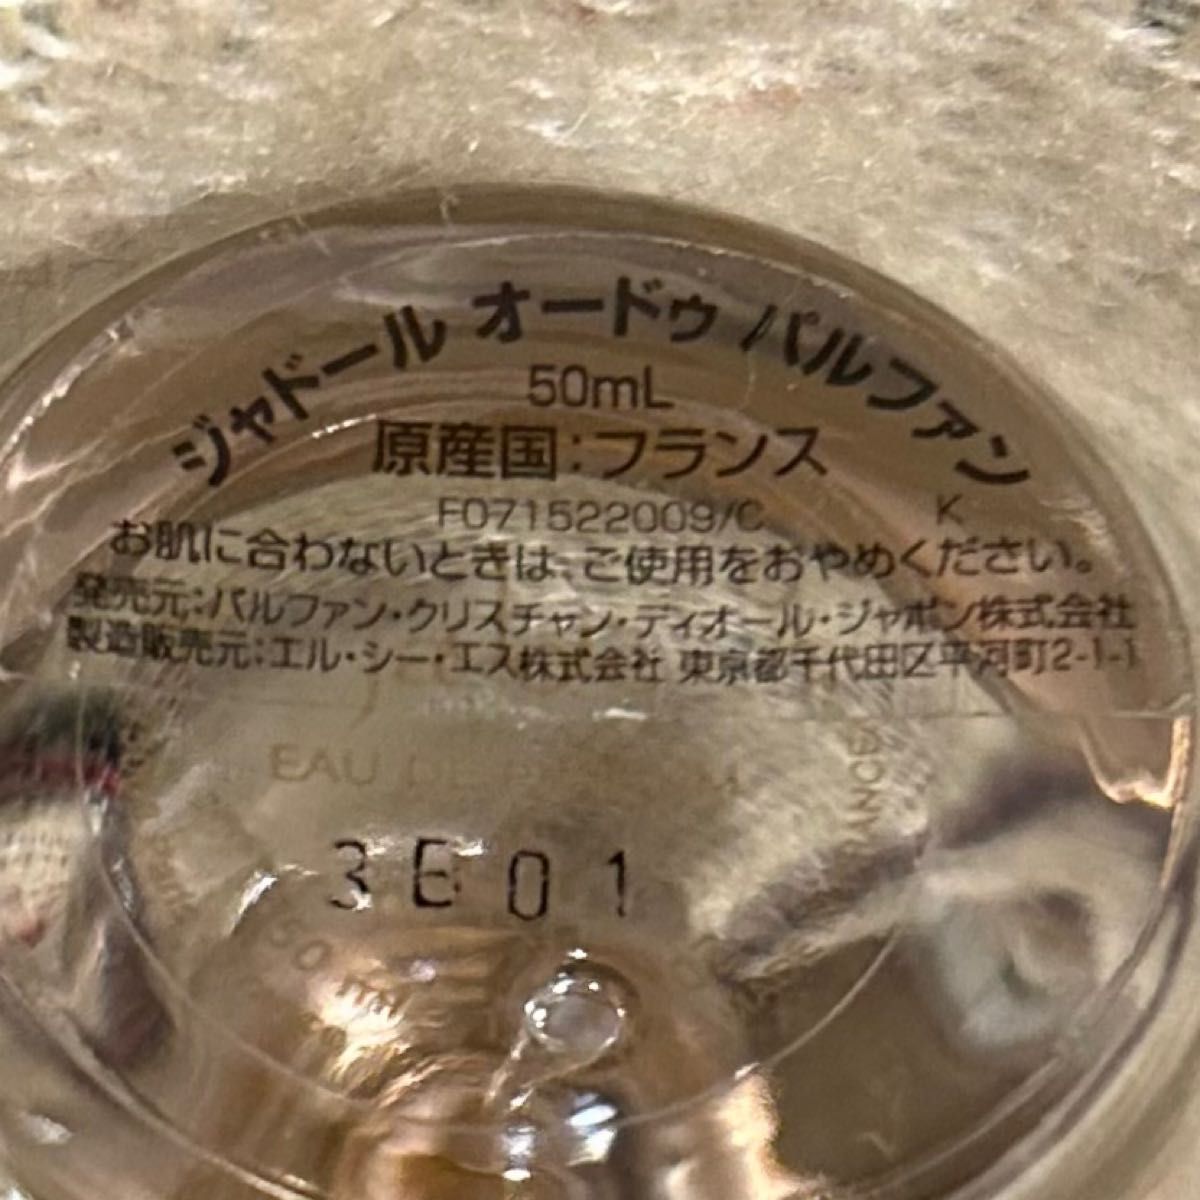 Dior jadore eau parfum 箱 ショッパー サンプル付き